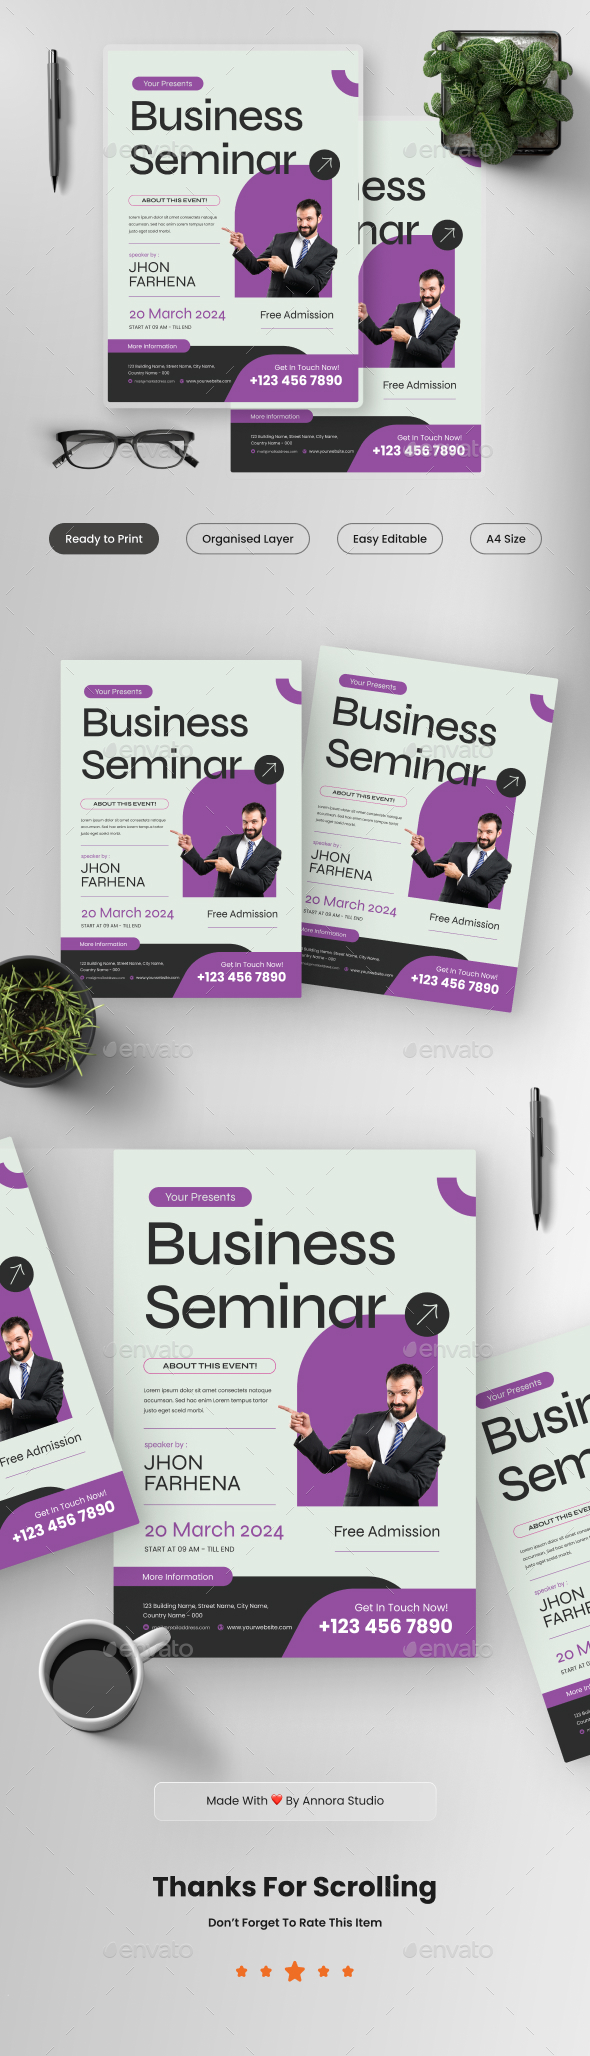 [DOWNLOAD]Business Seminar Flyer